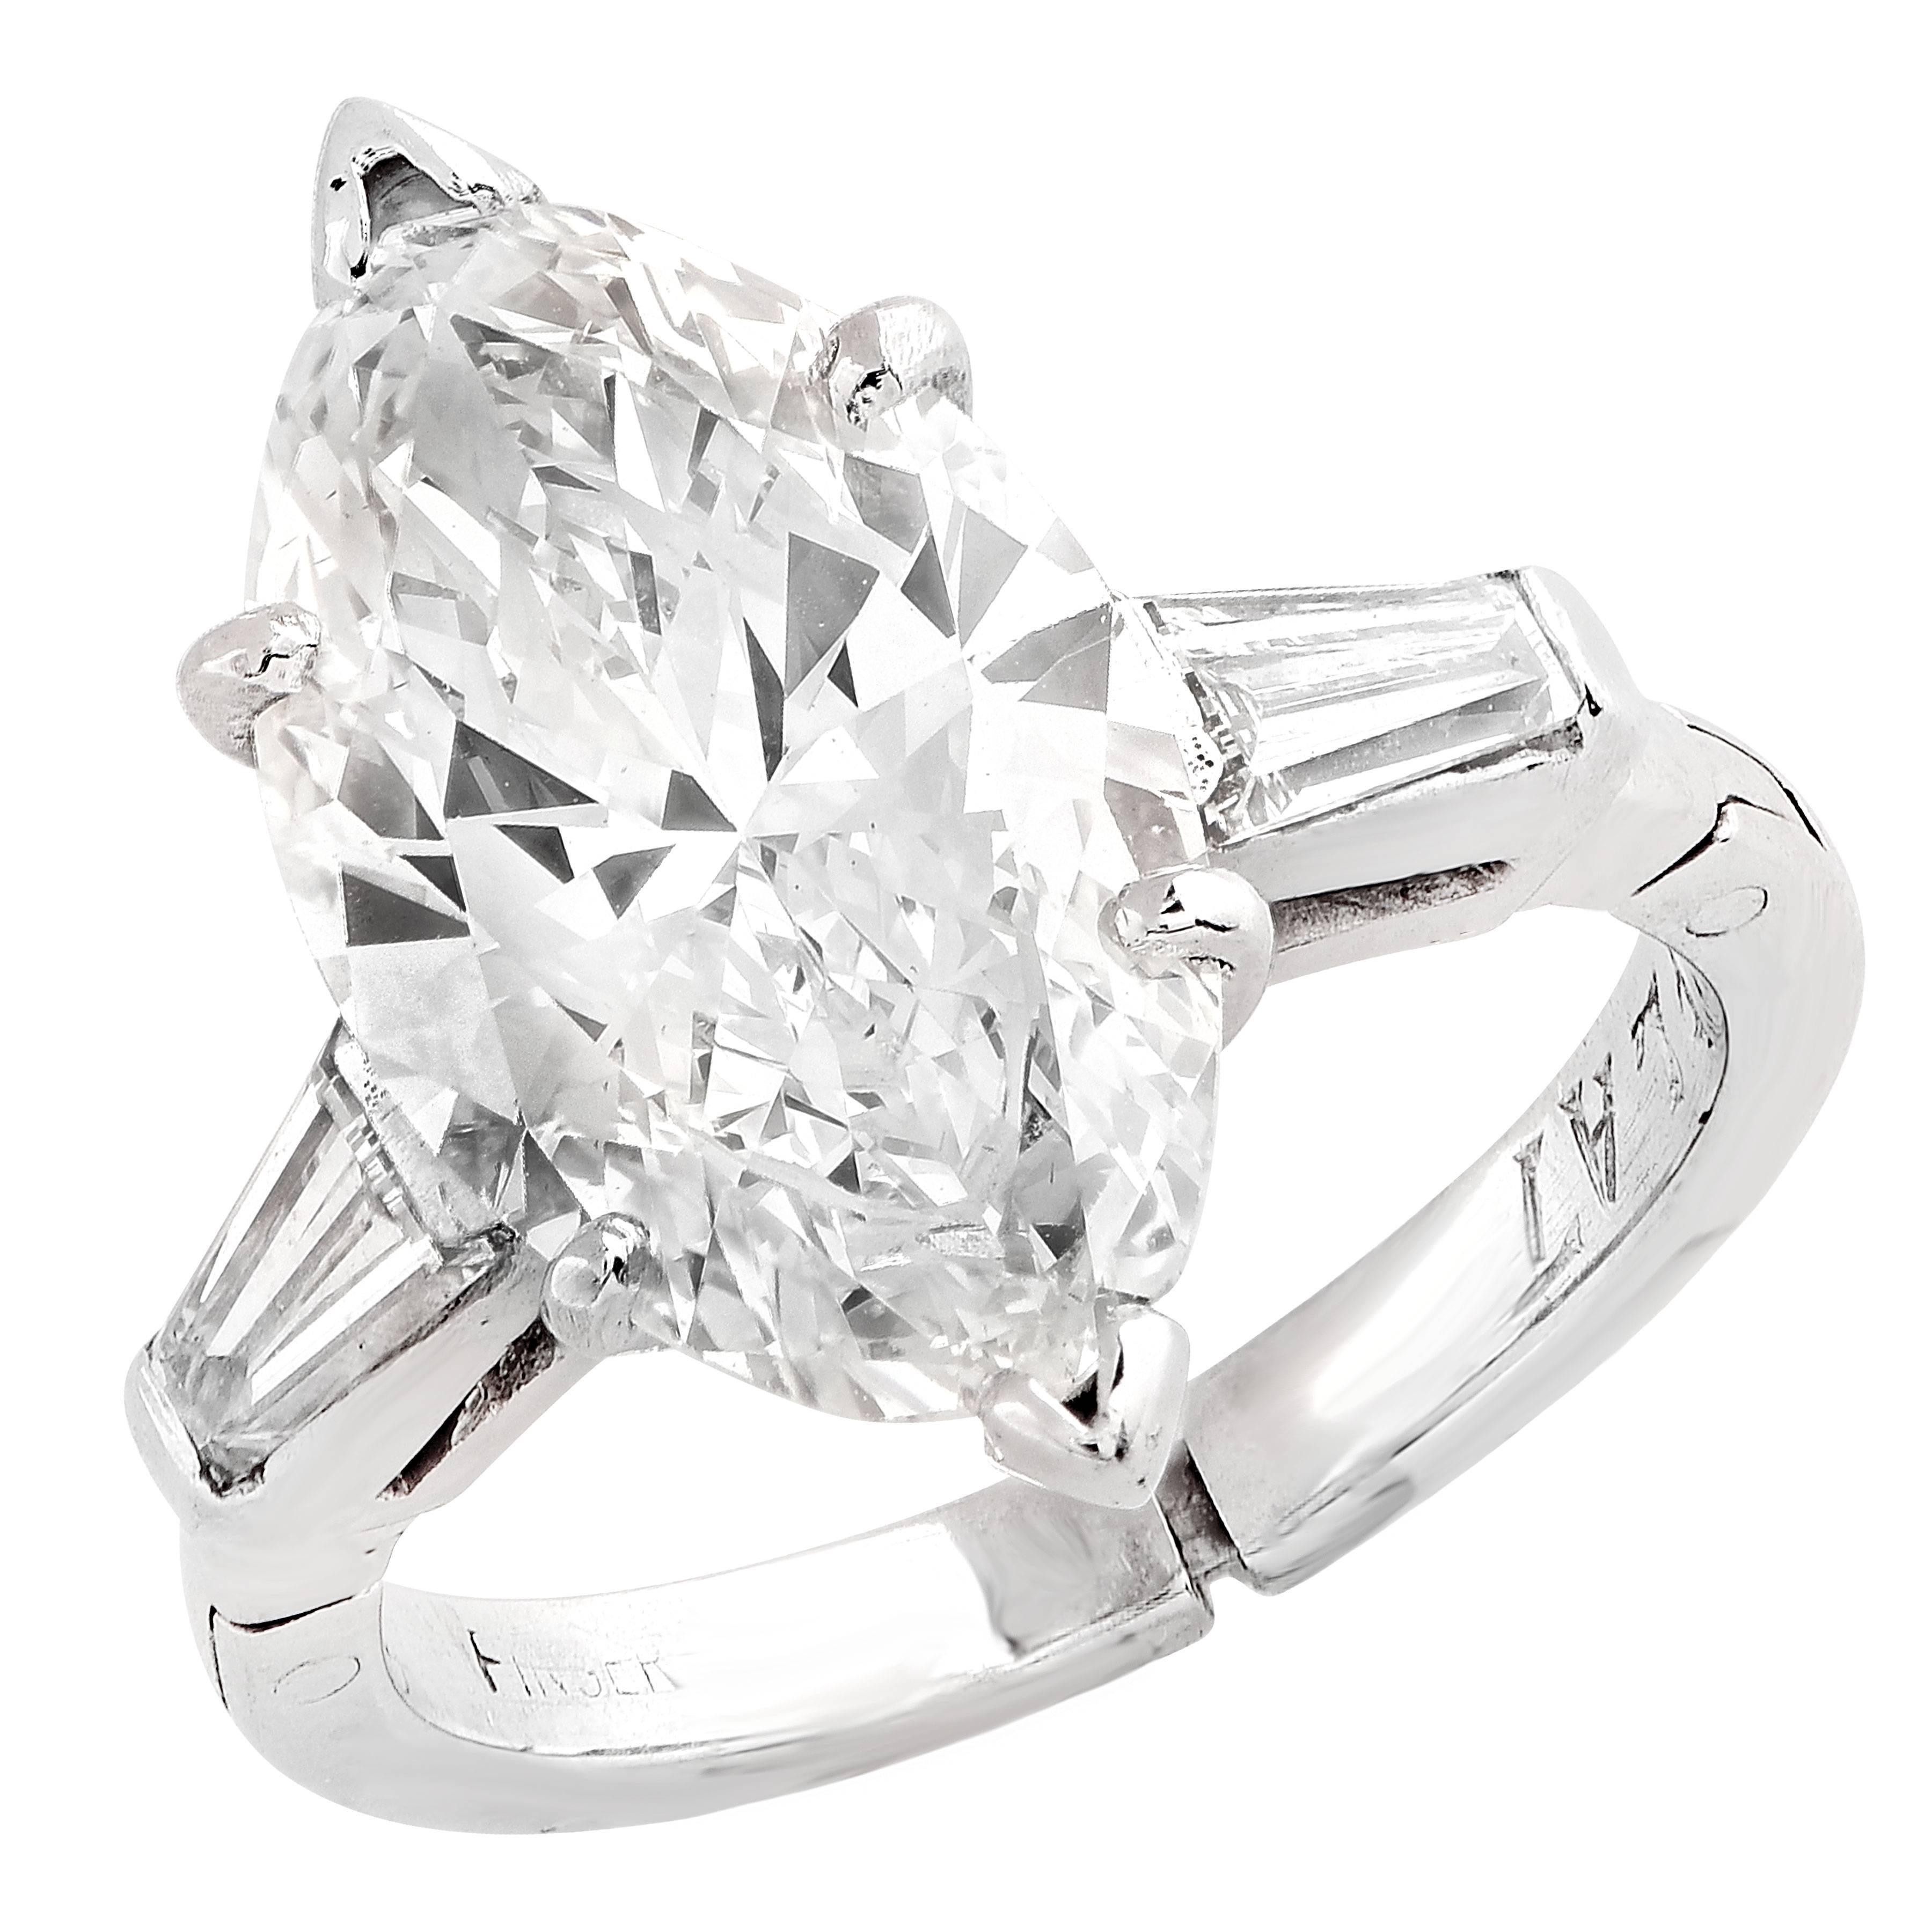 3.5 Carat Marquise Cut Diamond Engagement Ring